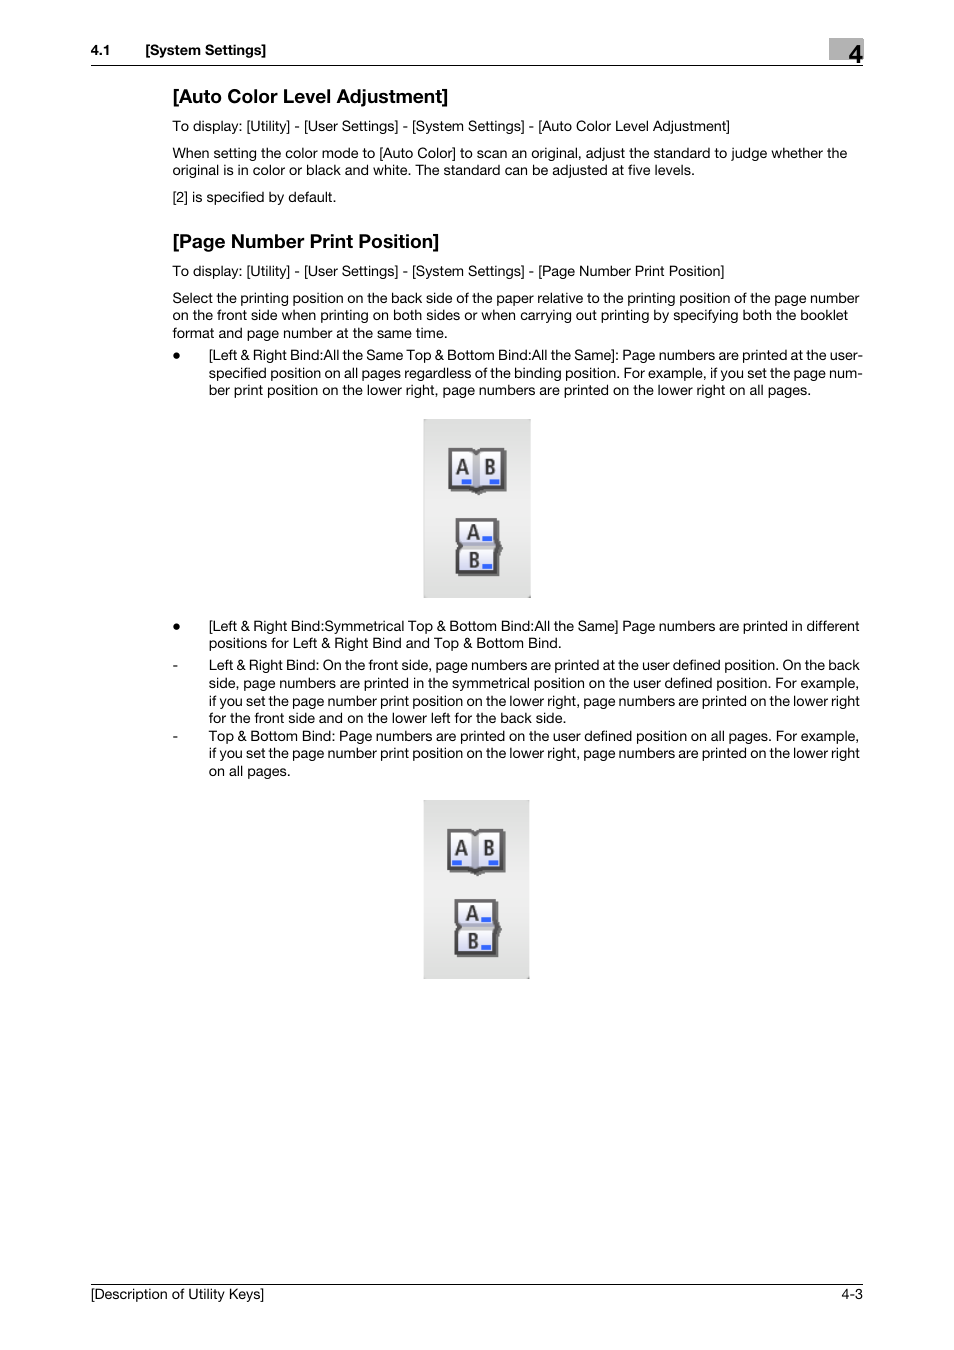 Auto color level adjustment, Page number print position | Konica Minolta bizhub 4050 User Manual | Page 21 / 65